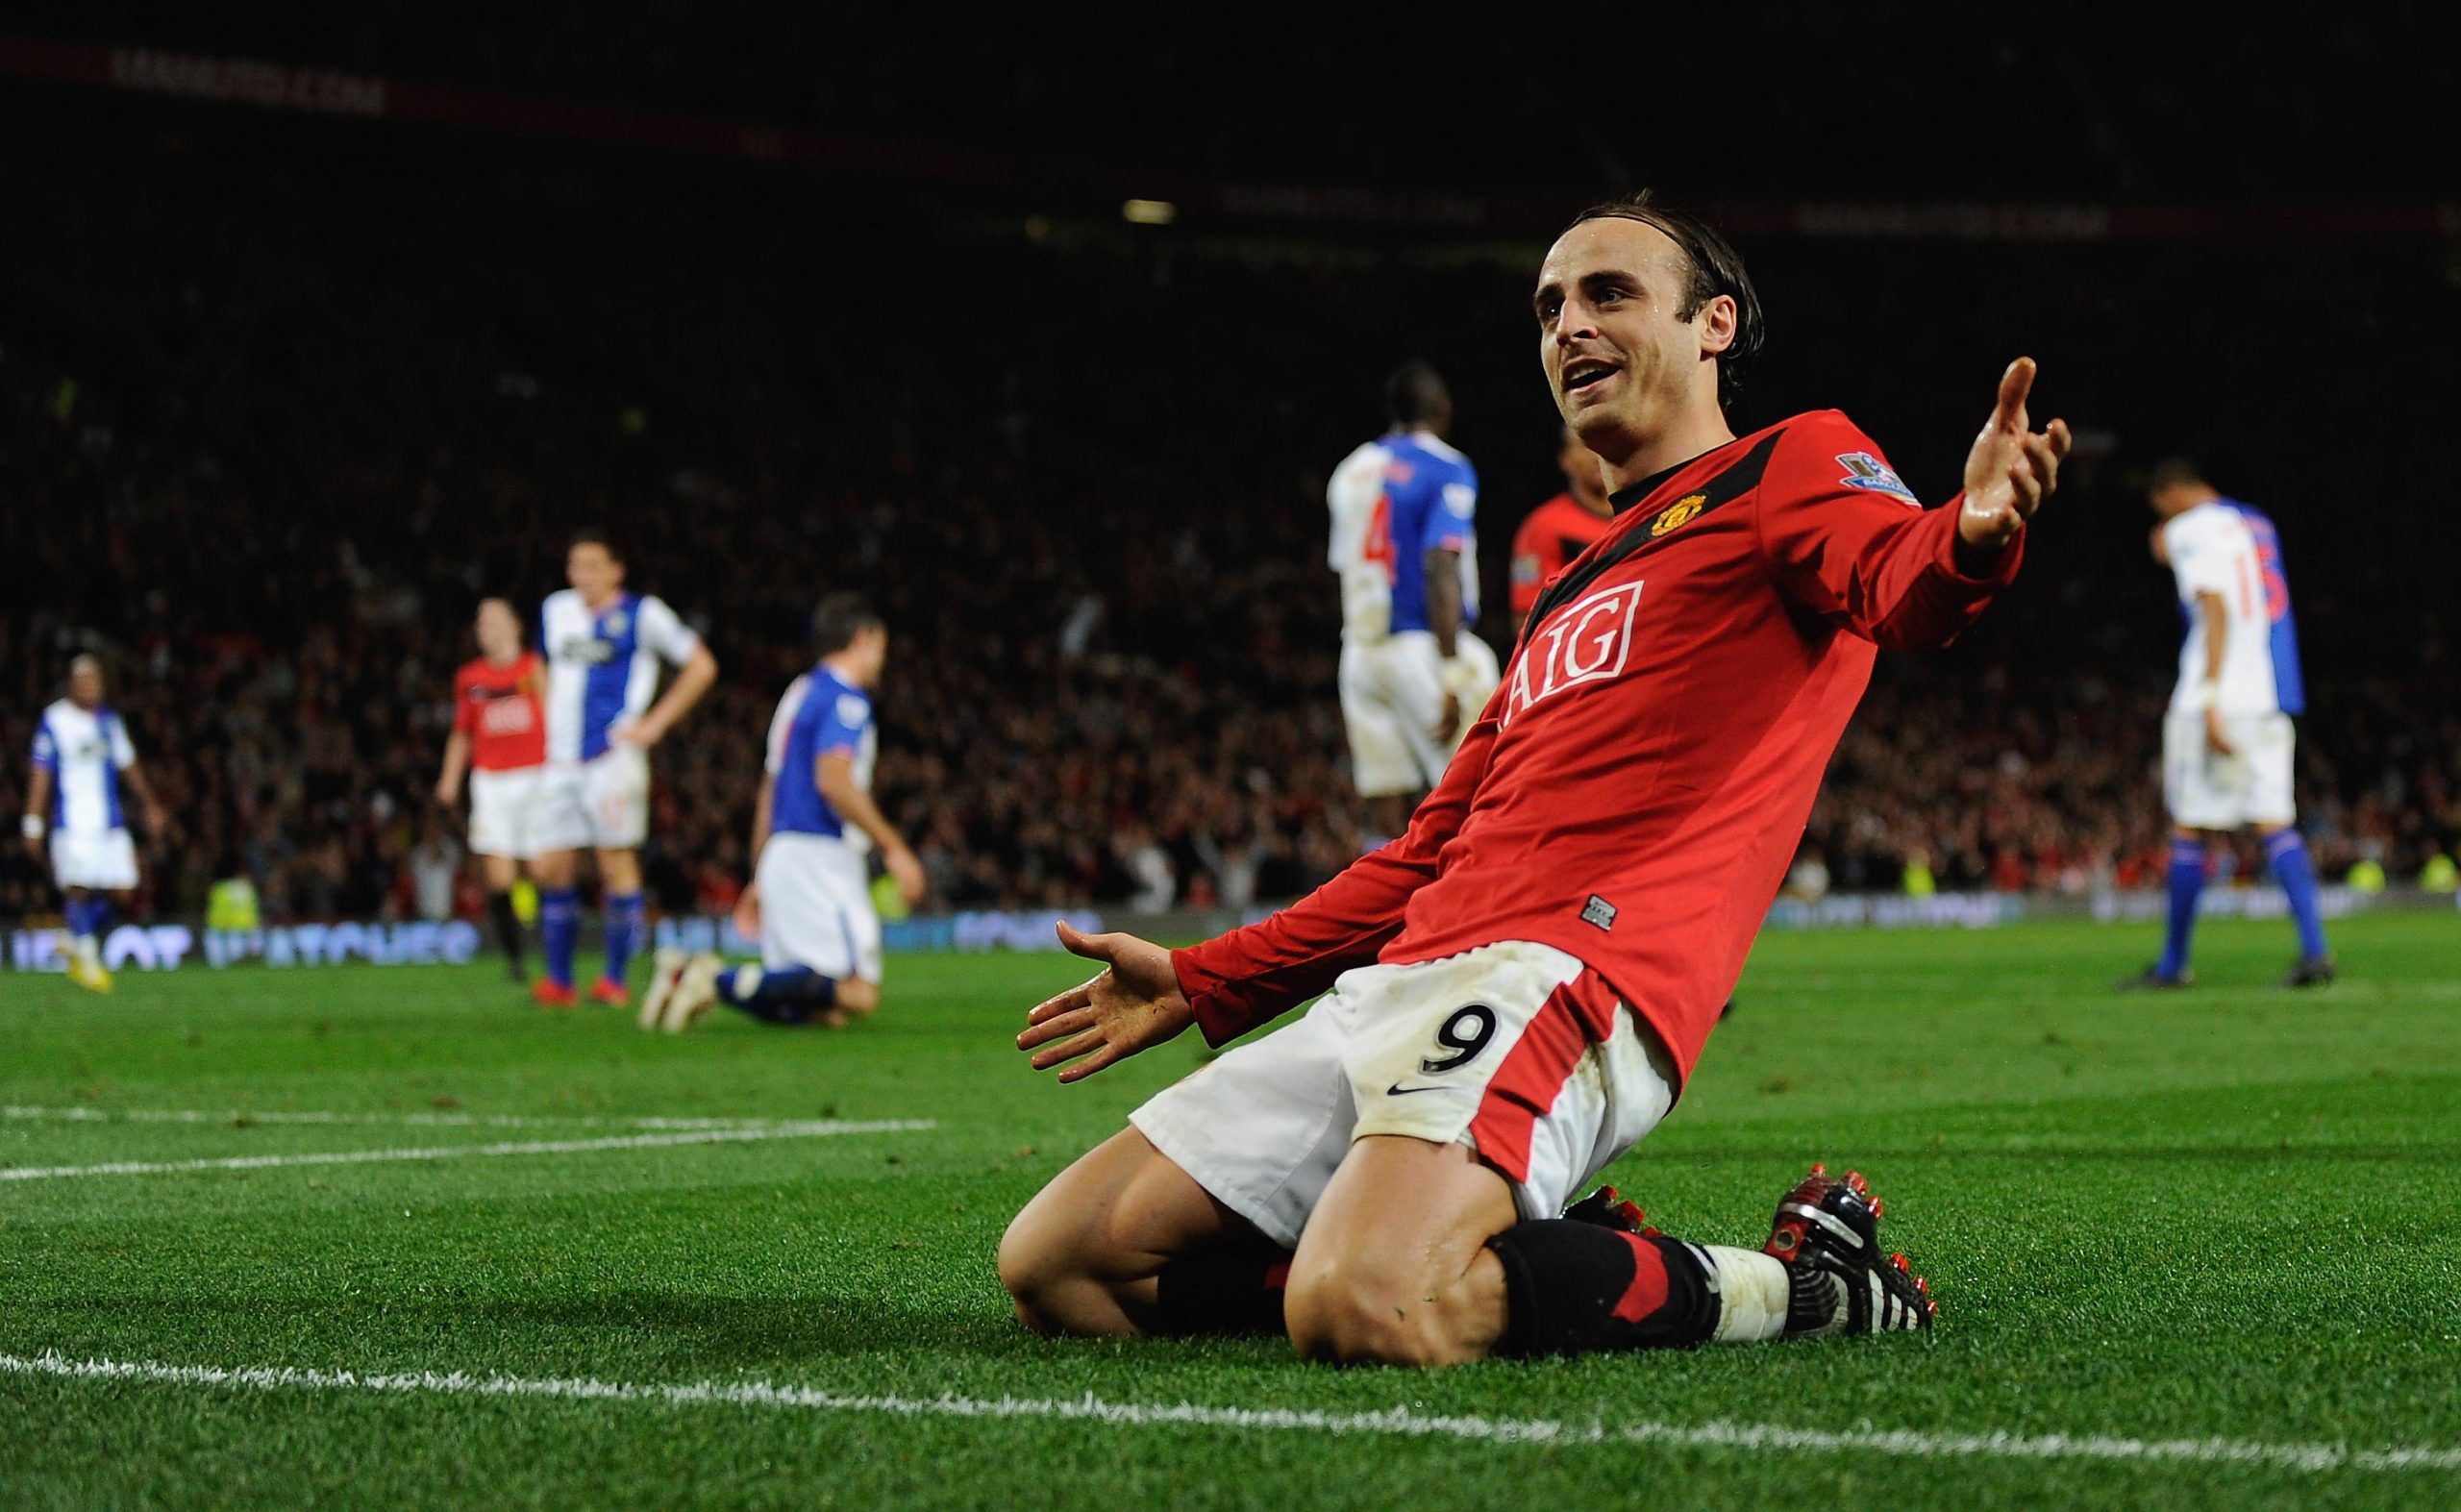  Dimitar Berbatov of Manchester United celebrates